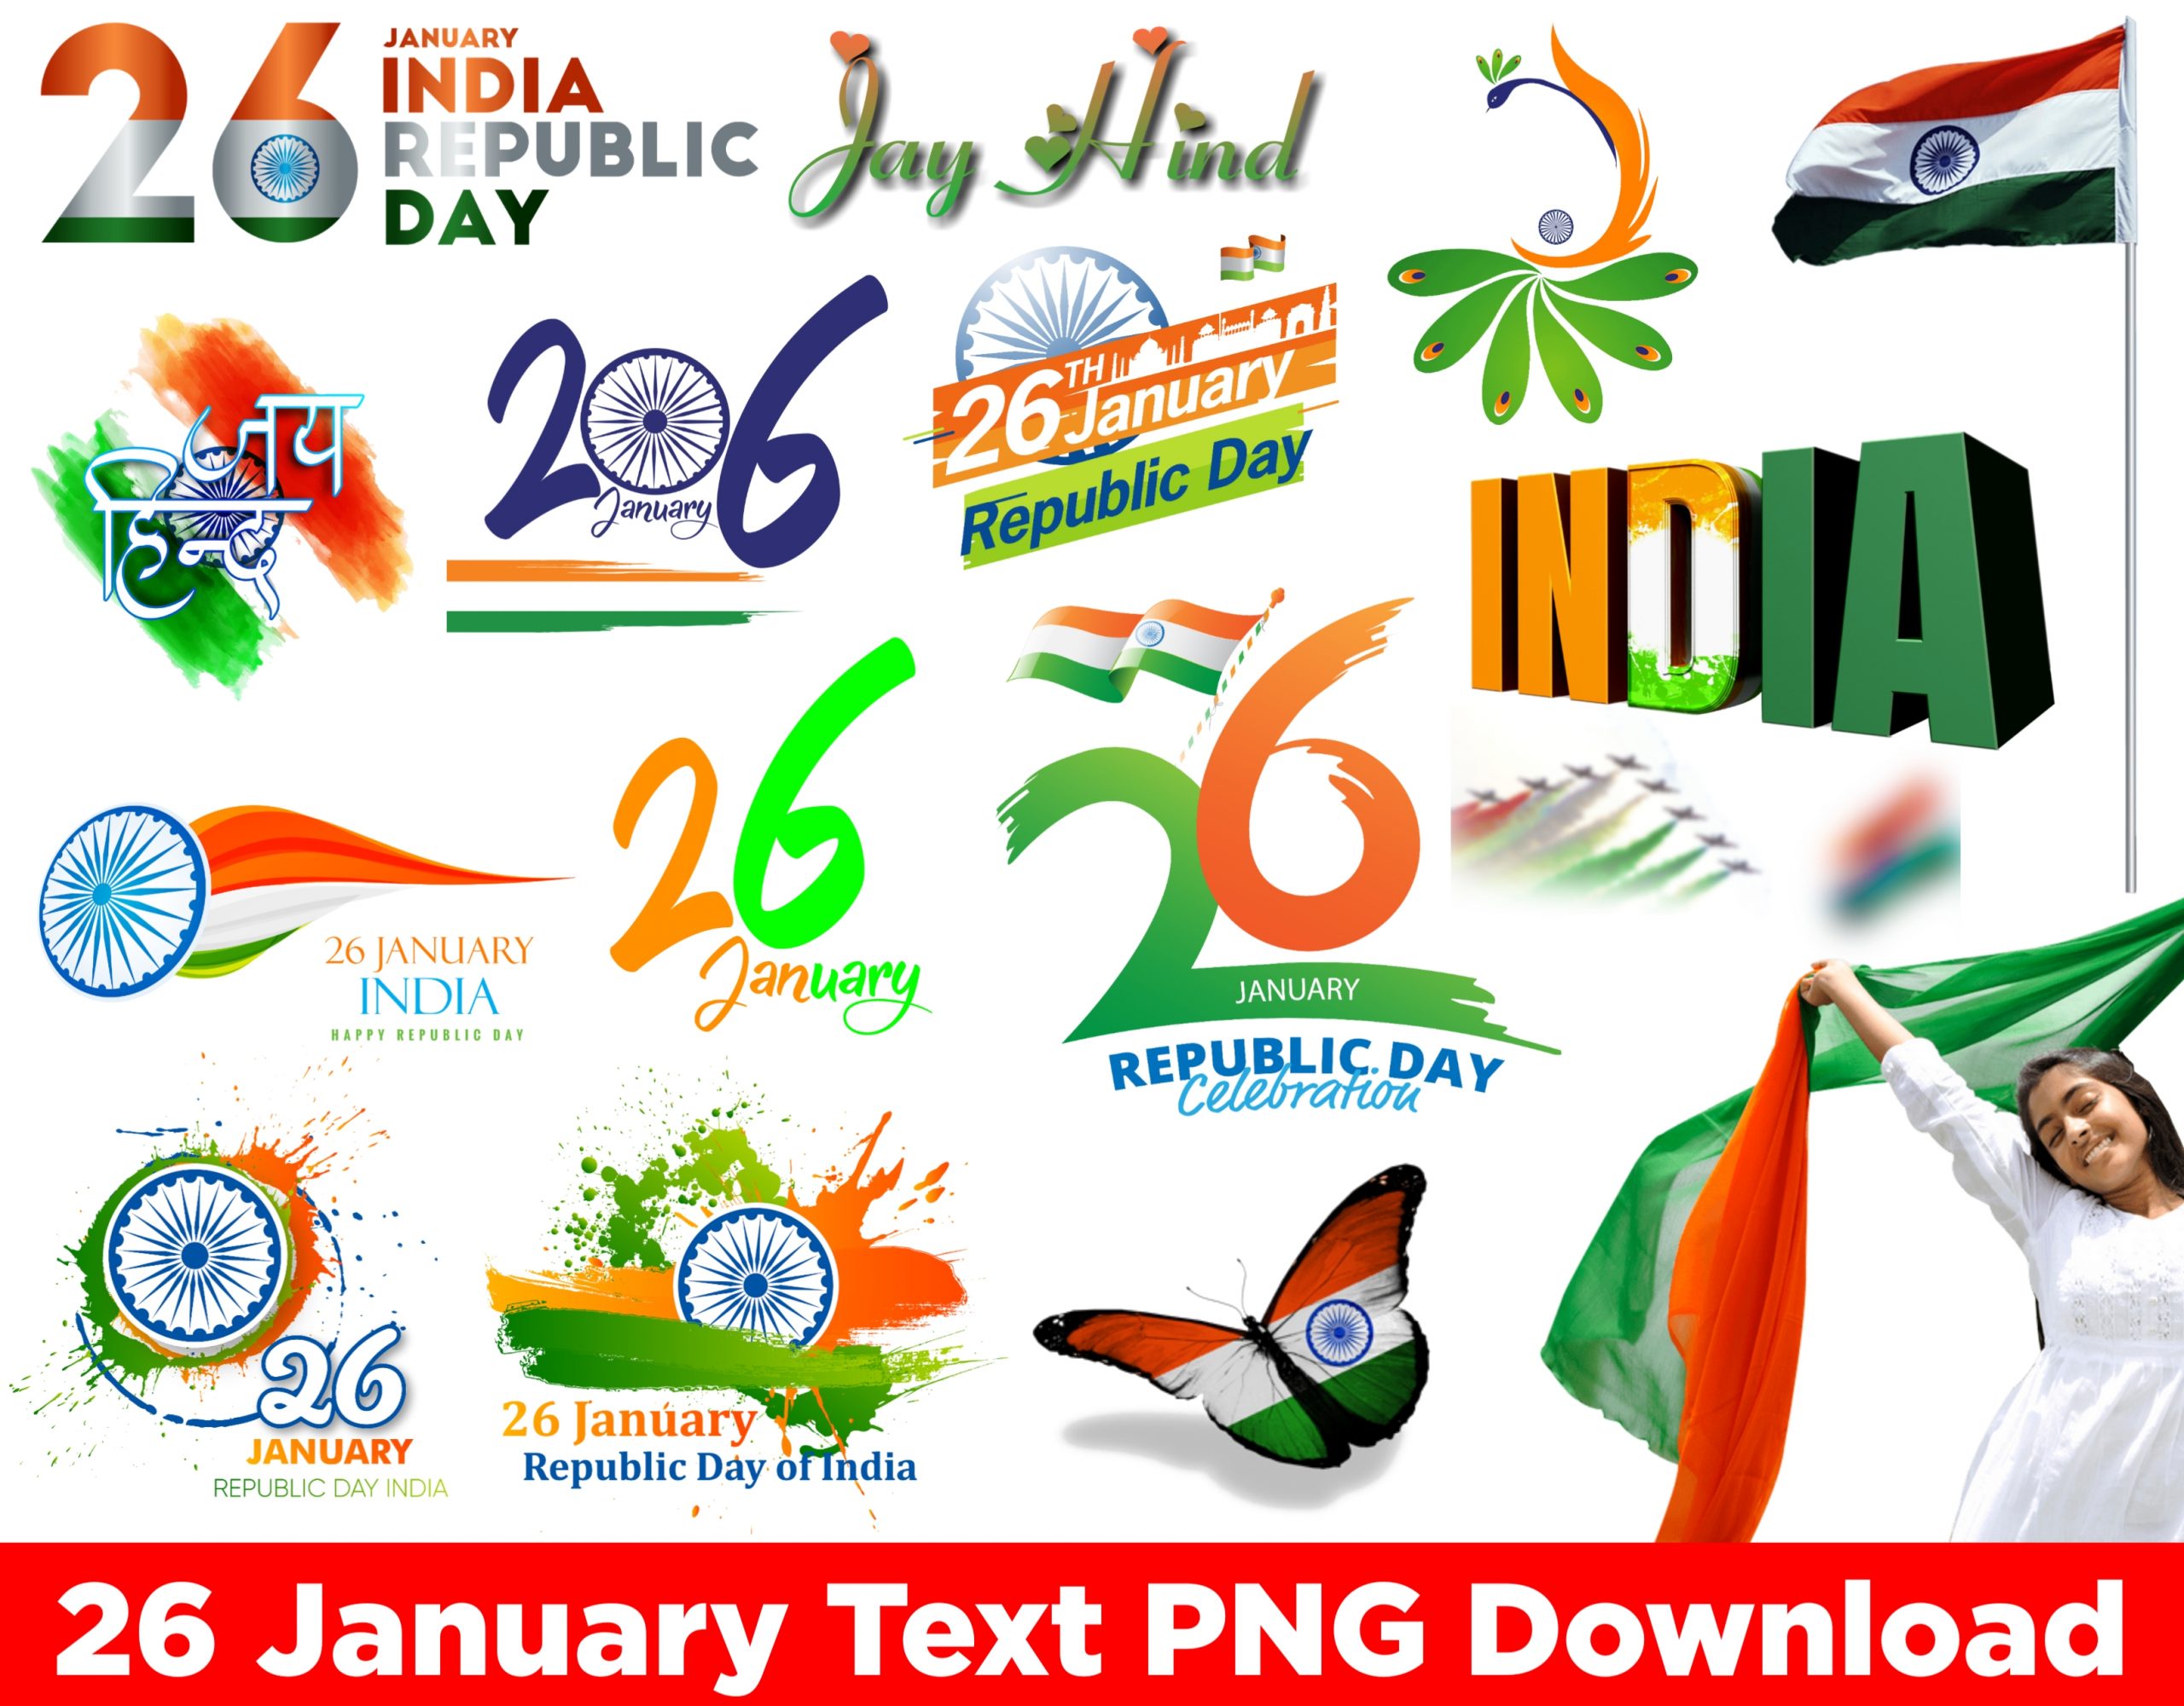 Indian flag png images download  Image Resolution 320x385  Indian Flag  Download  Indian flag Independence day background Indian flag images